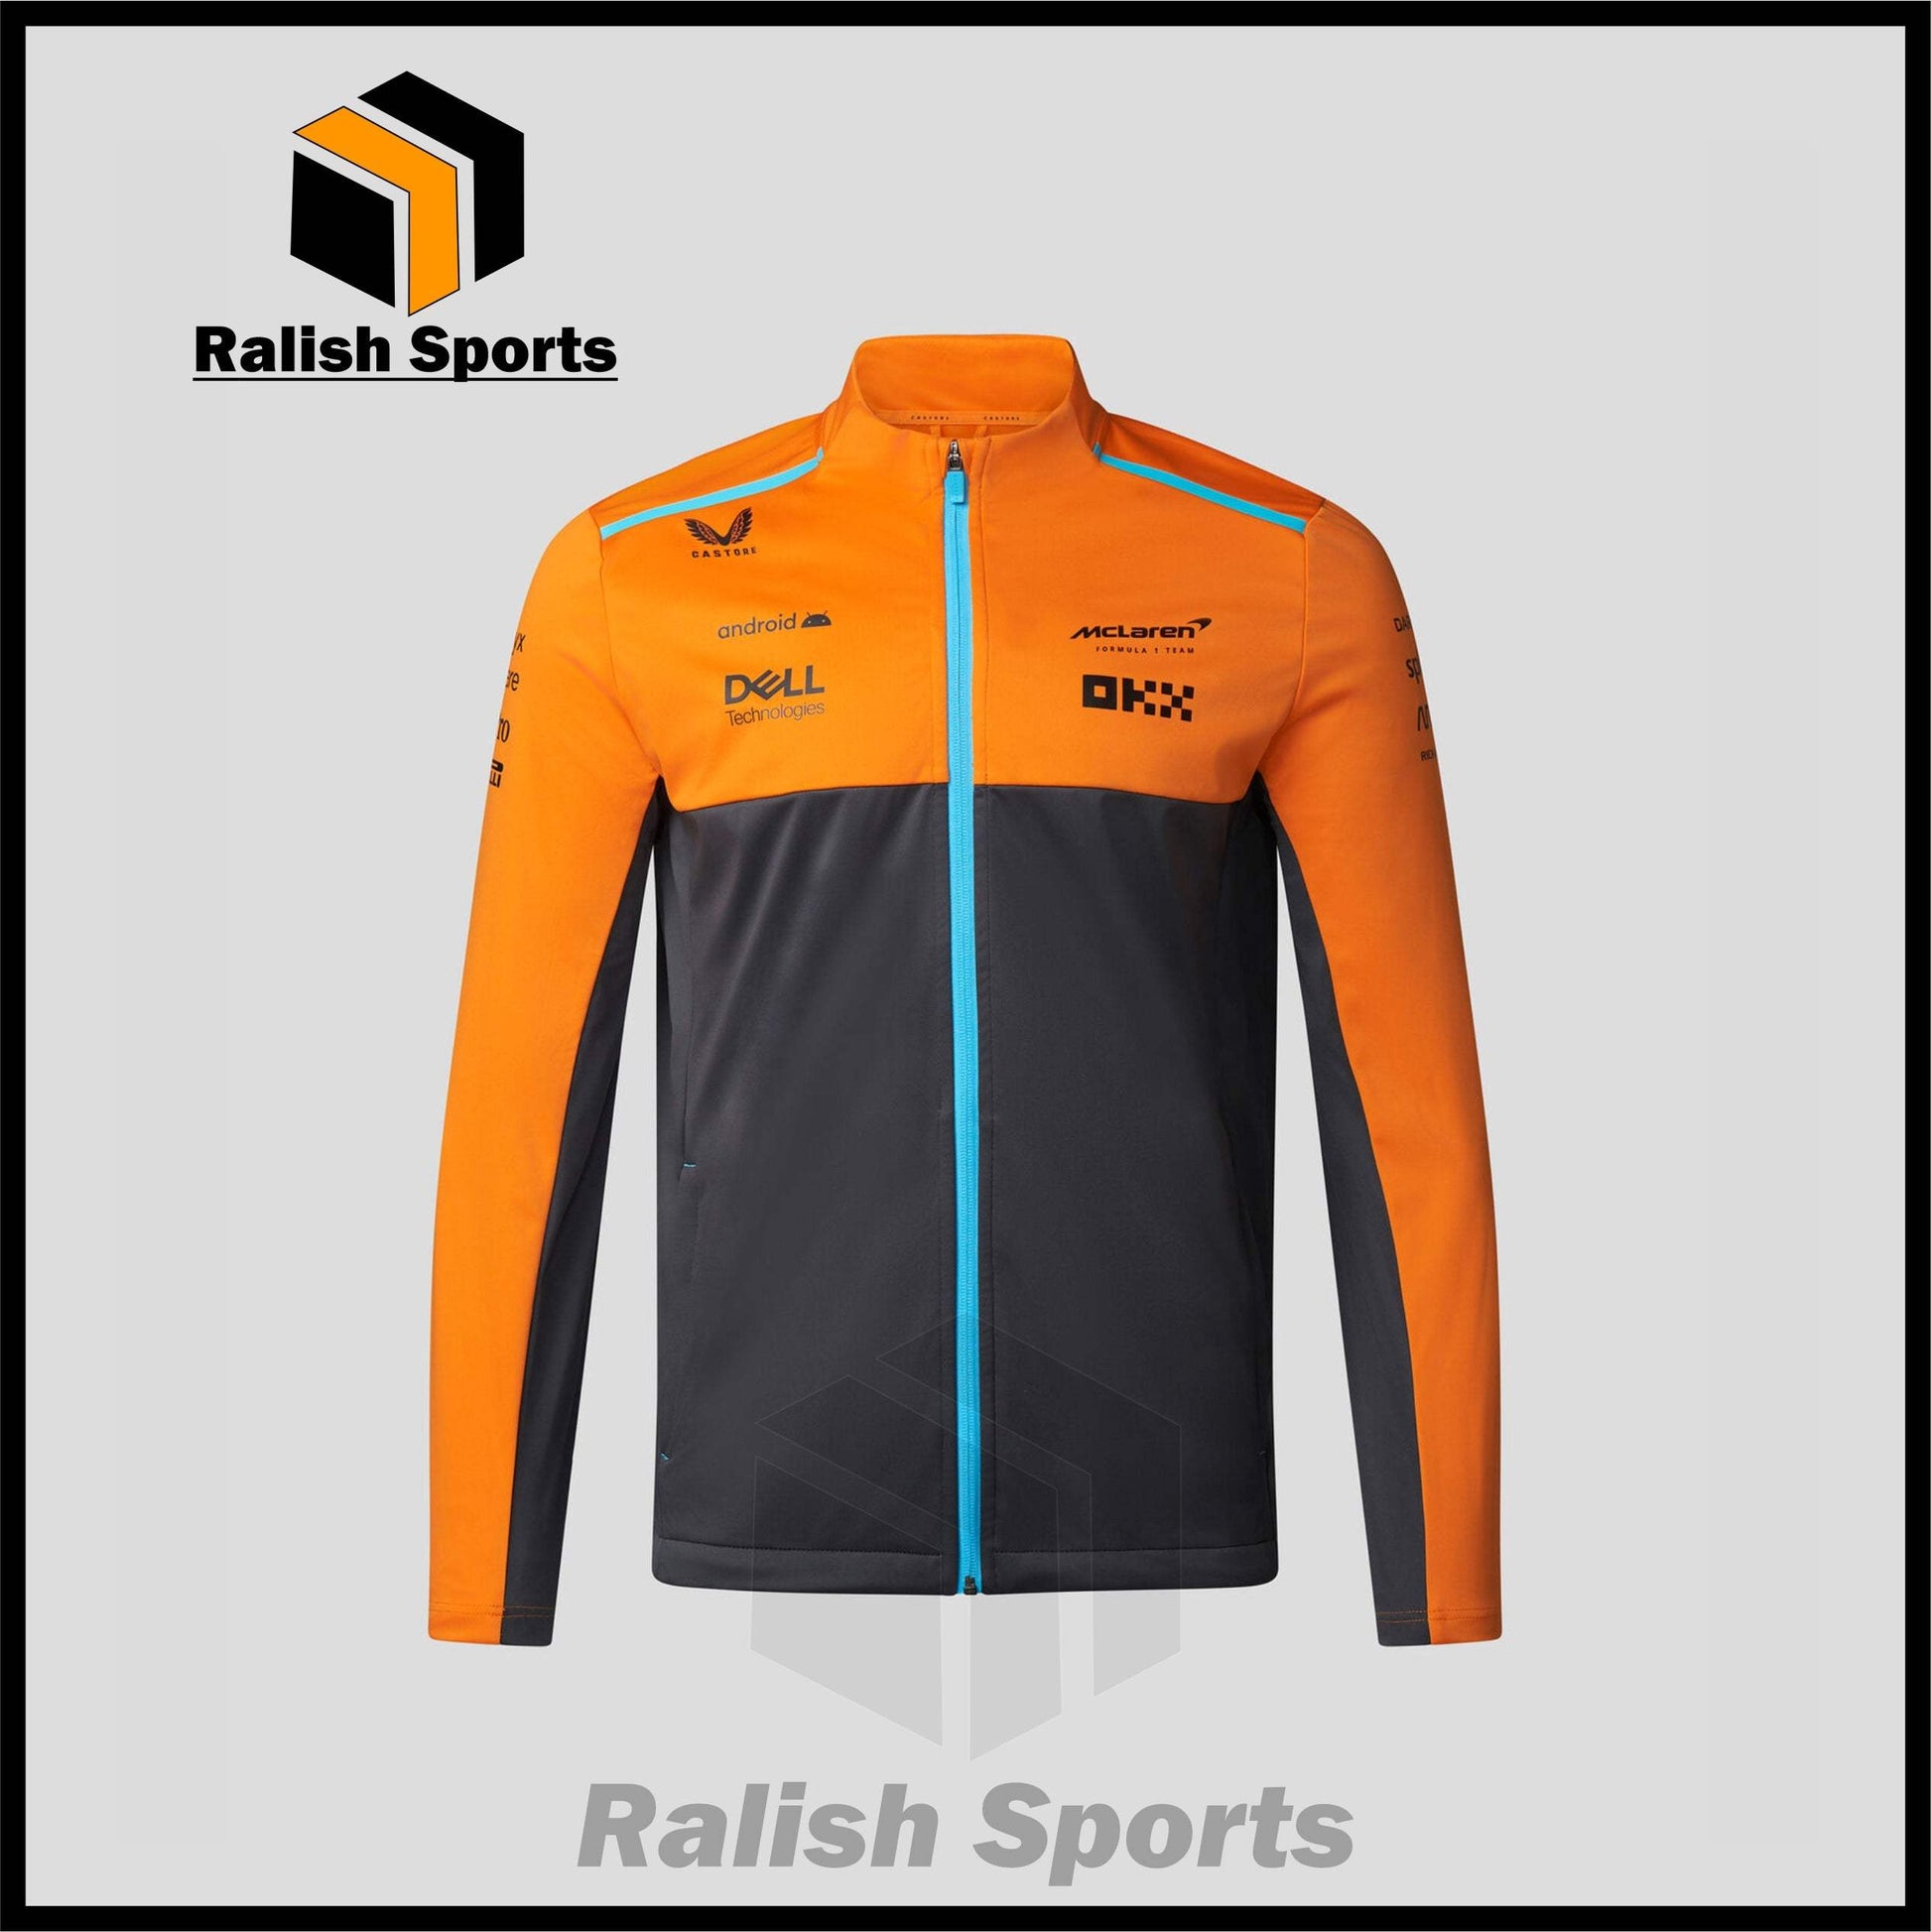 McLaren F1 2023 Team Softshell Jacket - Ralish Sports